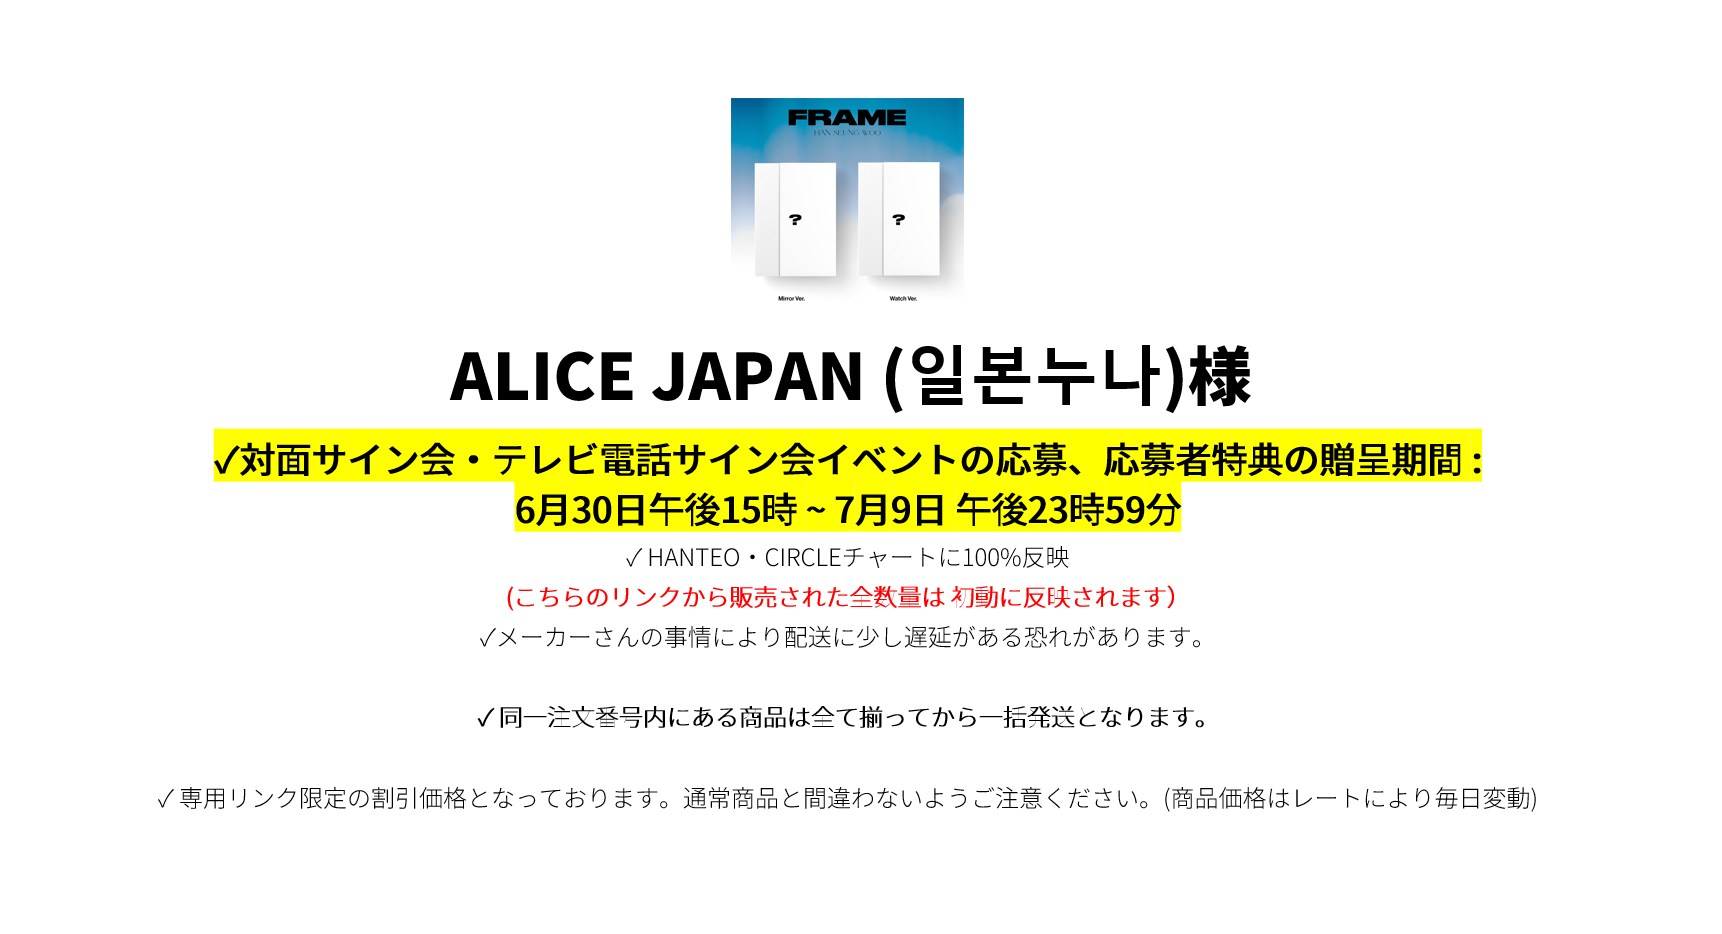 ALICE JAPAN(일본누나)様